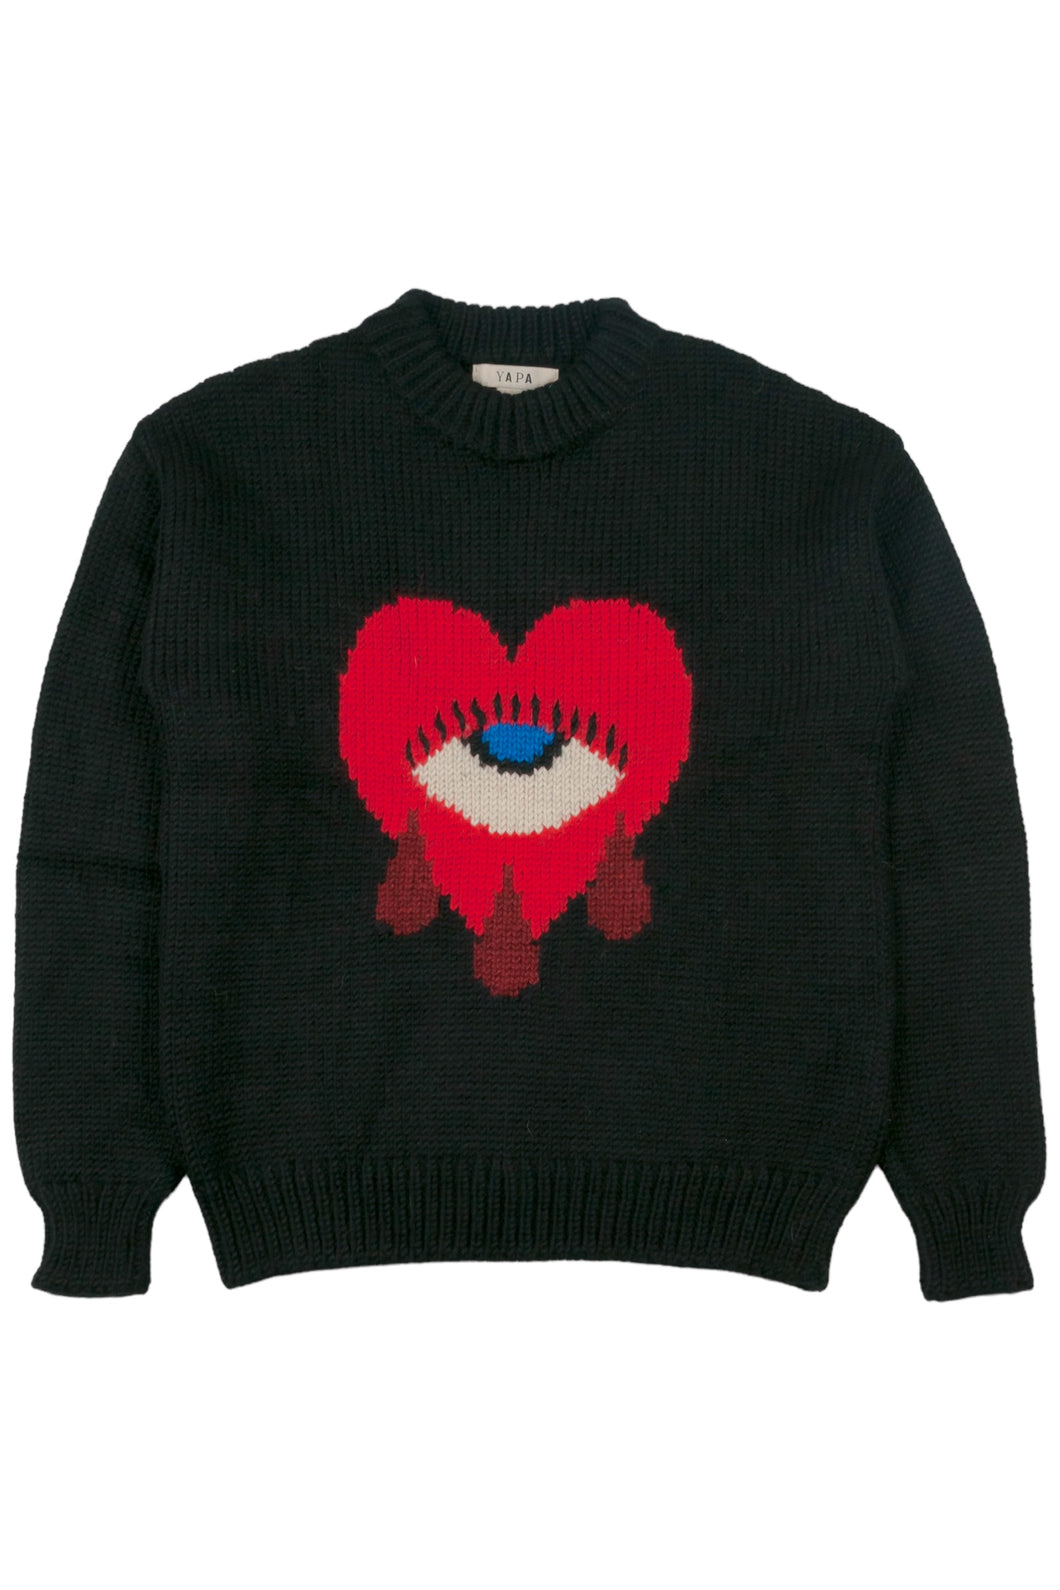 Eye and Heart Sweater Sophia